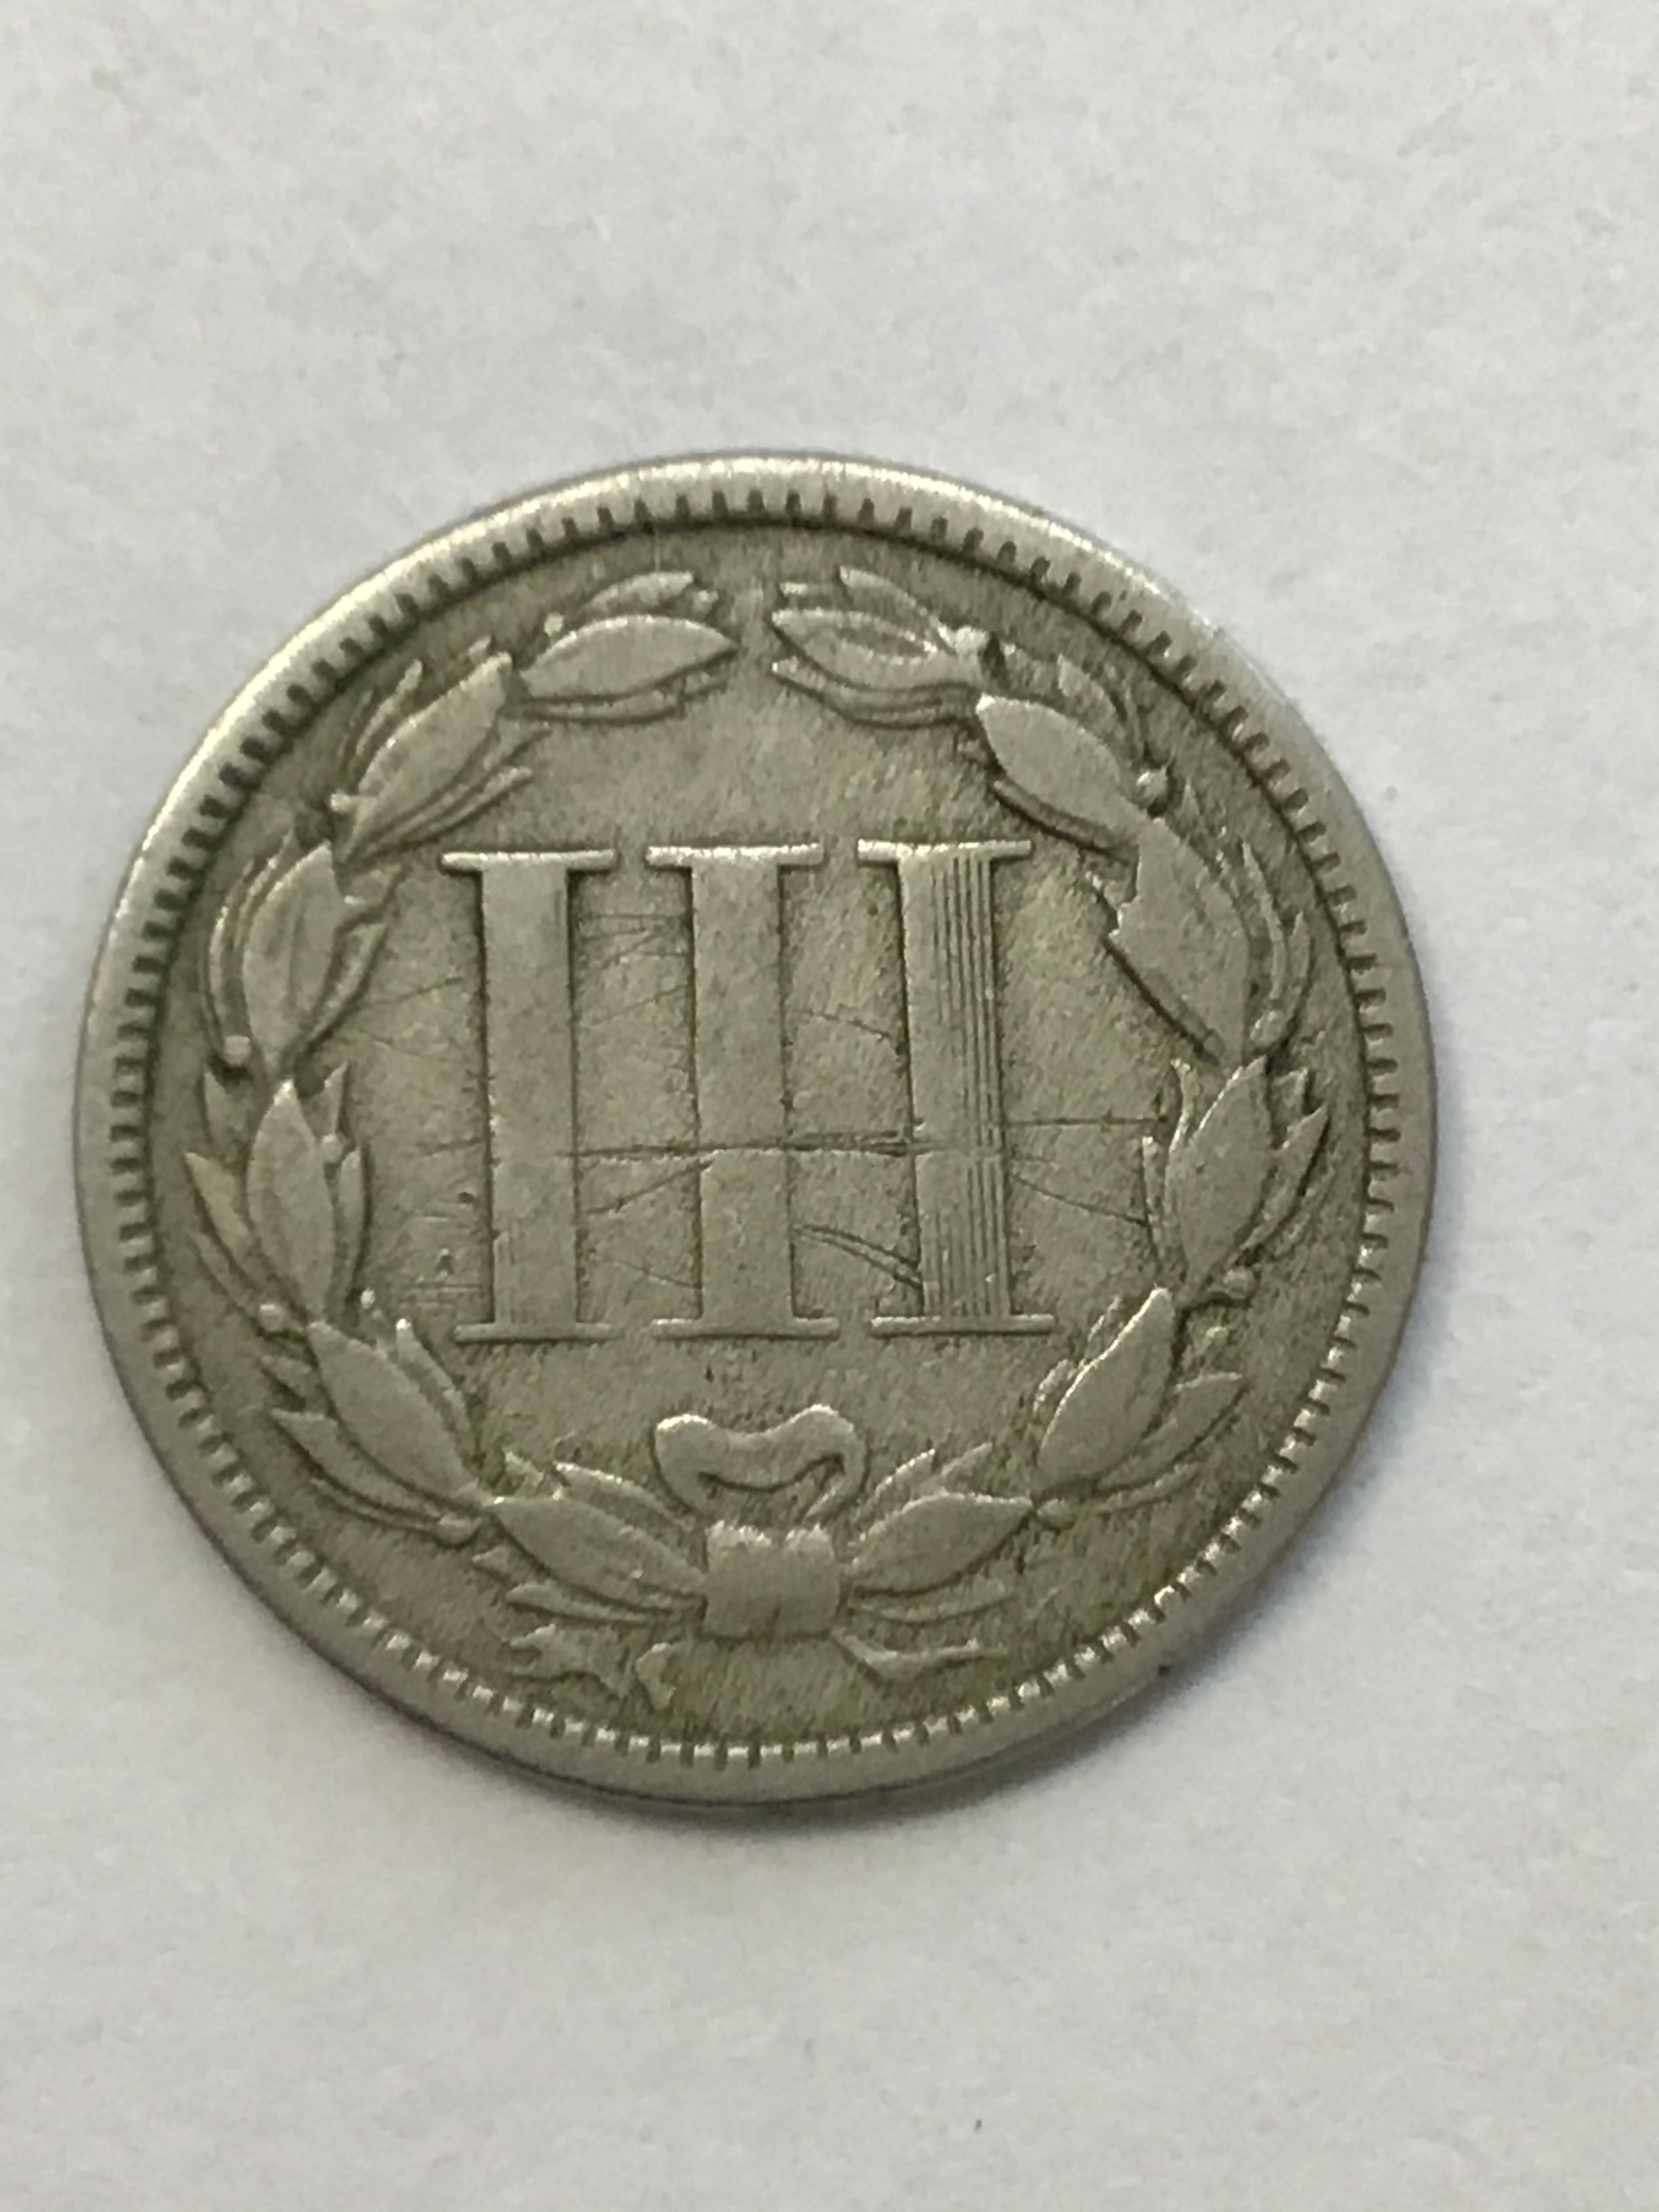 1870 Three Cent Nickel Piece